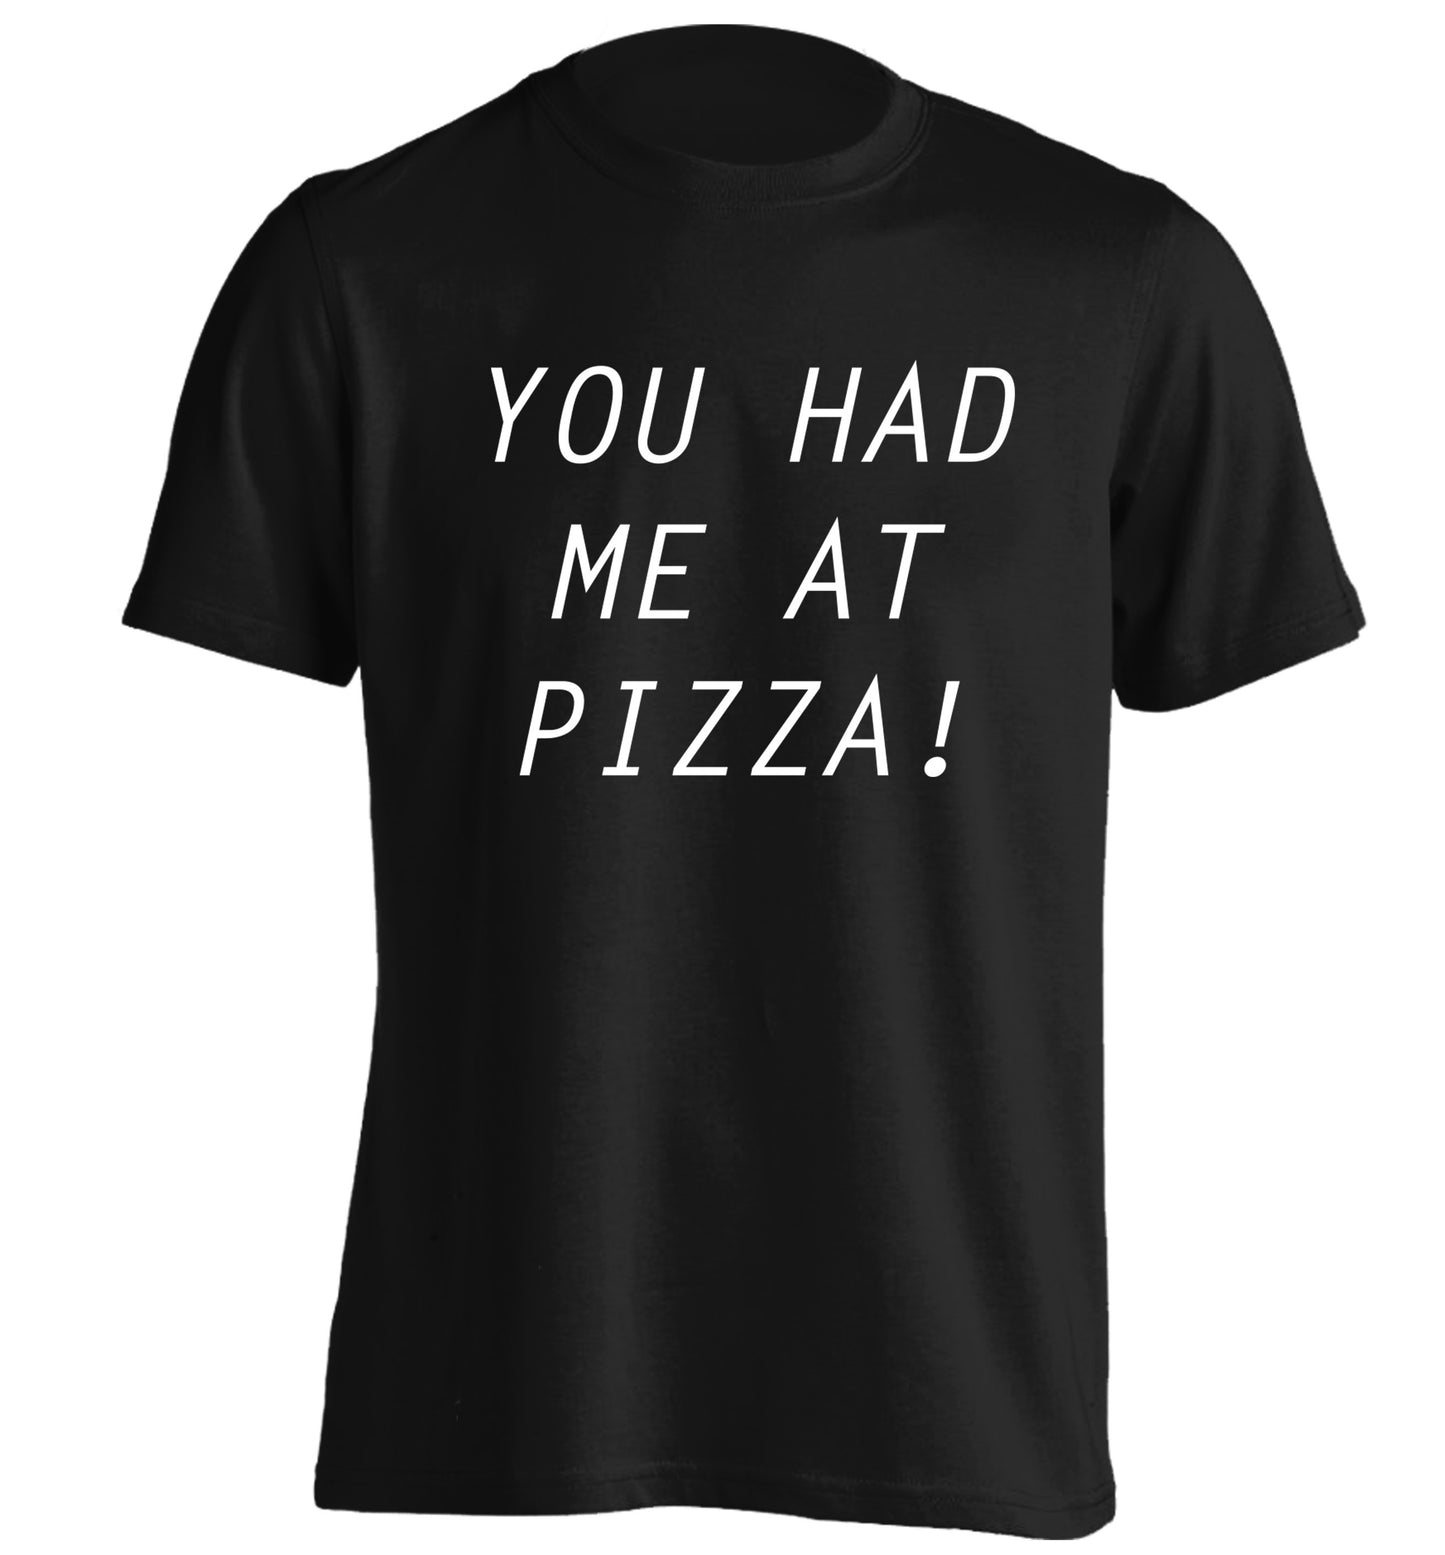 You had me at pizza adults unisex black Tshirt 2XL